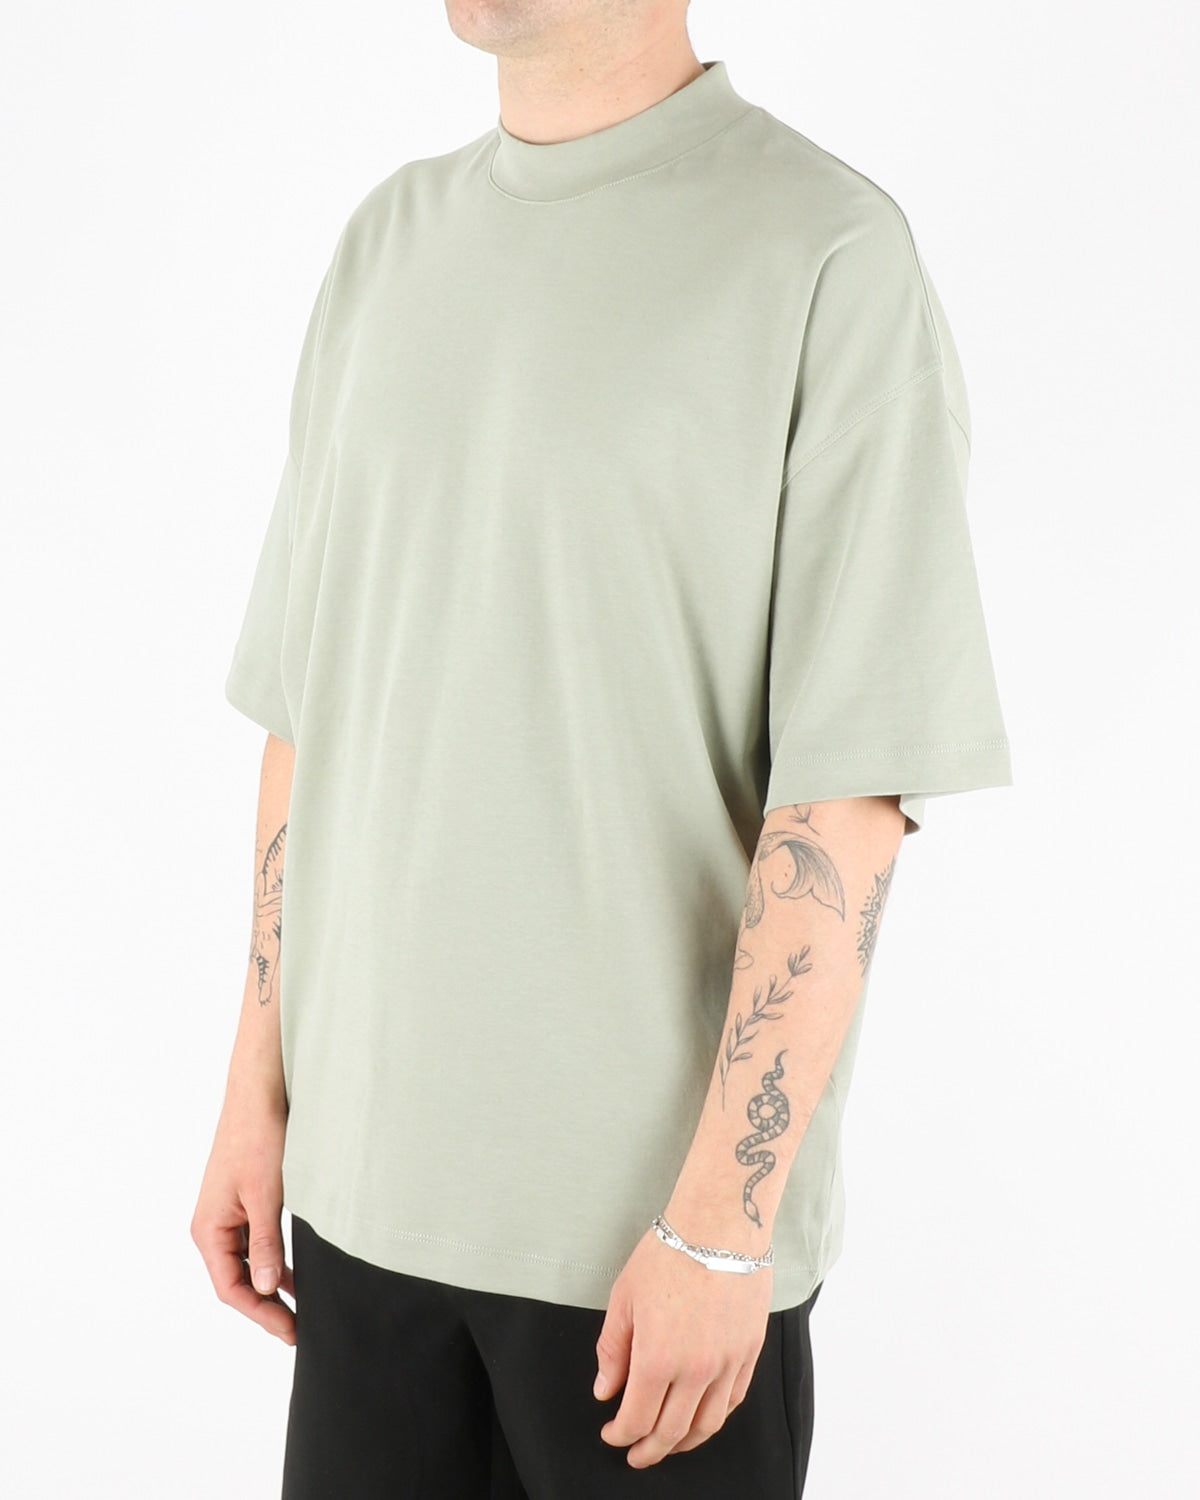 Hamal T-Shirt, seagrass